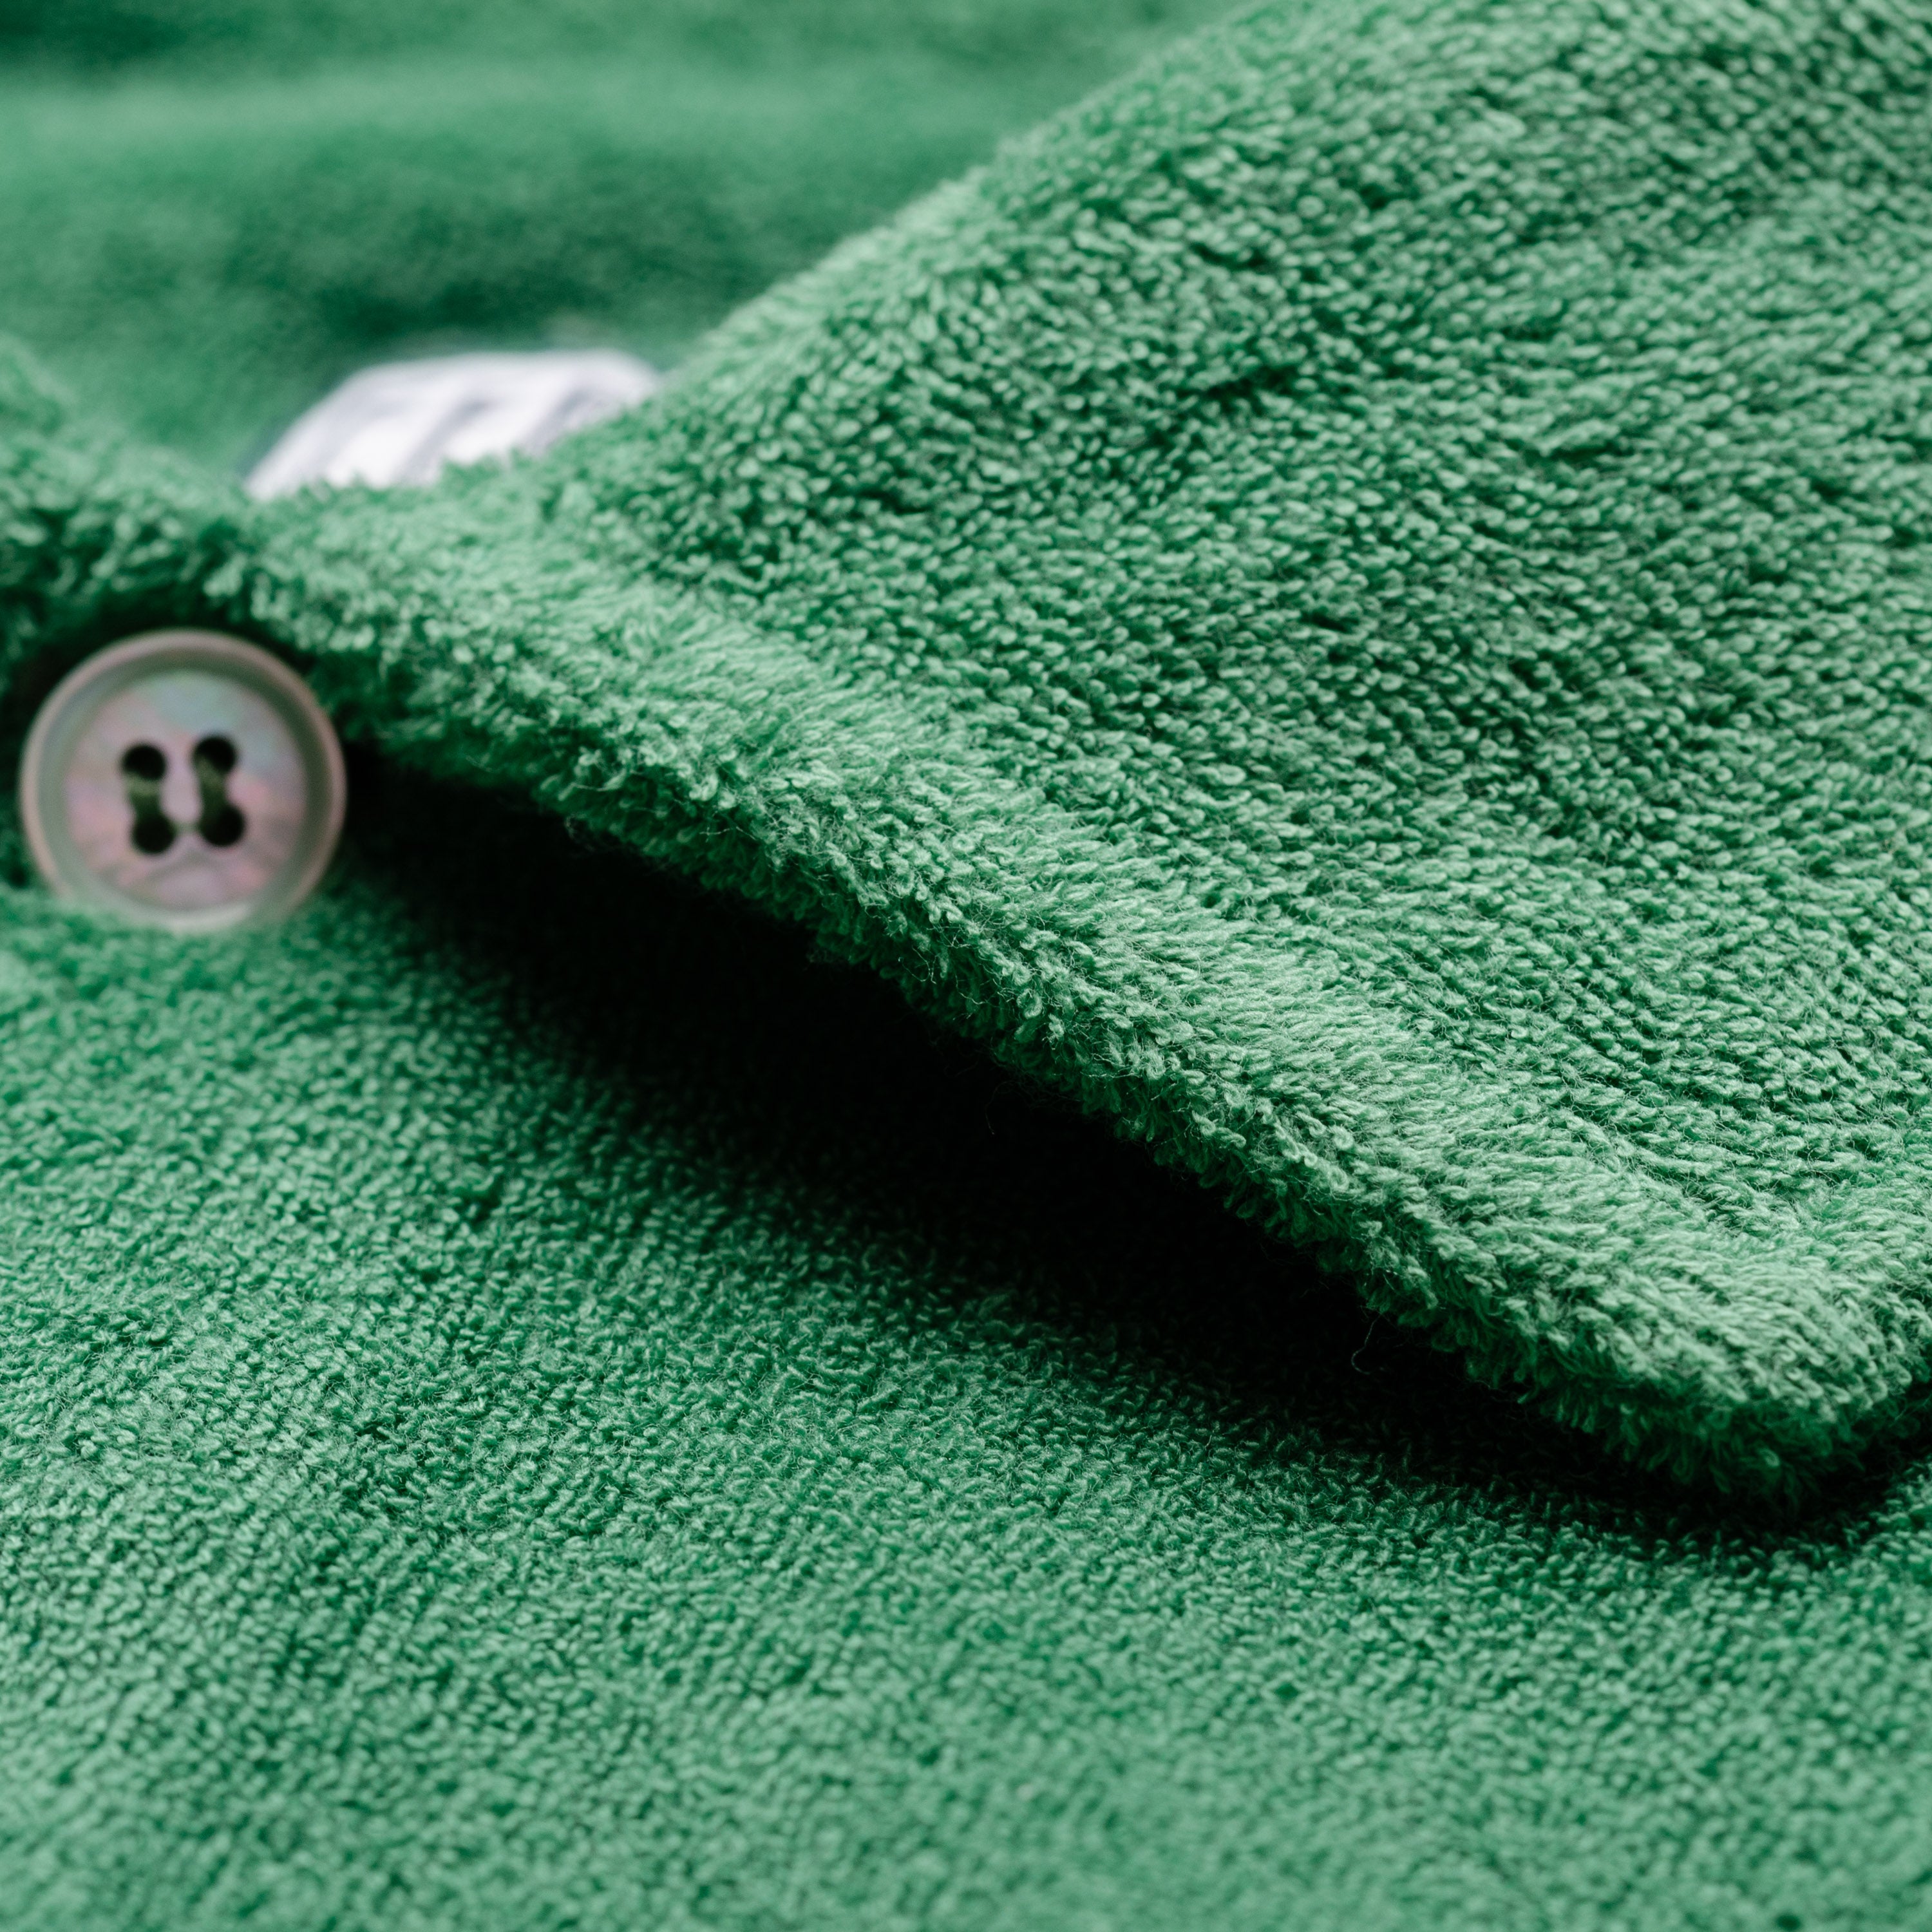 FEDELI "Mondial" Green Terry Cloth Short Sleeve Polo Shirt NEW Slim Fit FEDELI